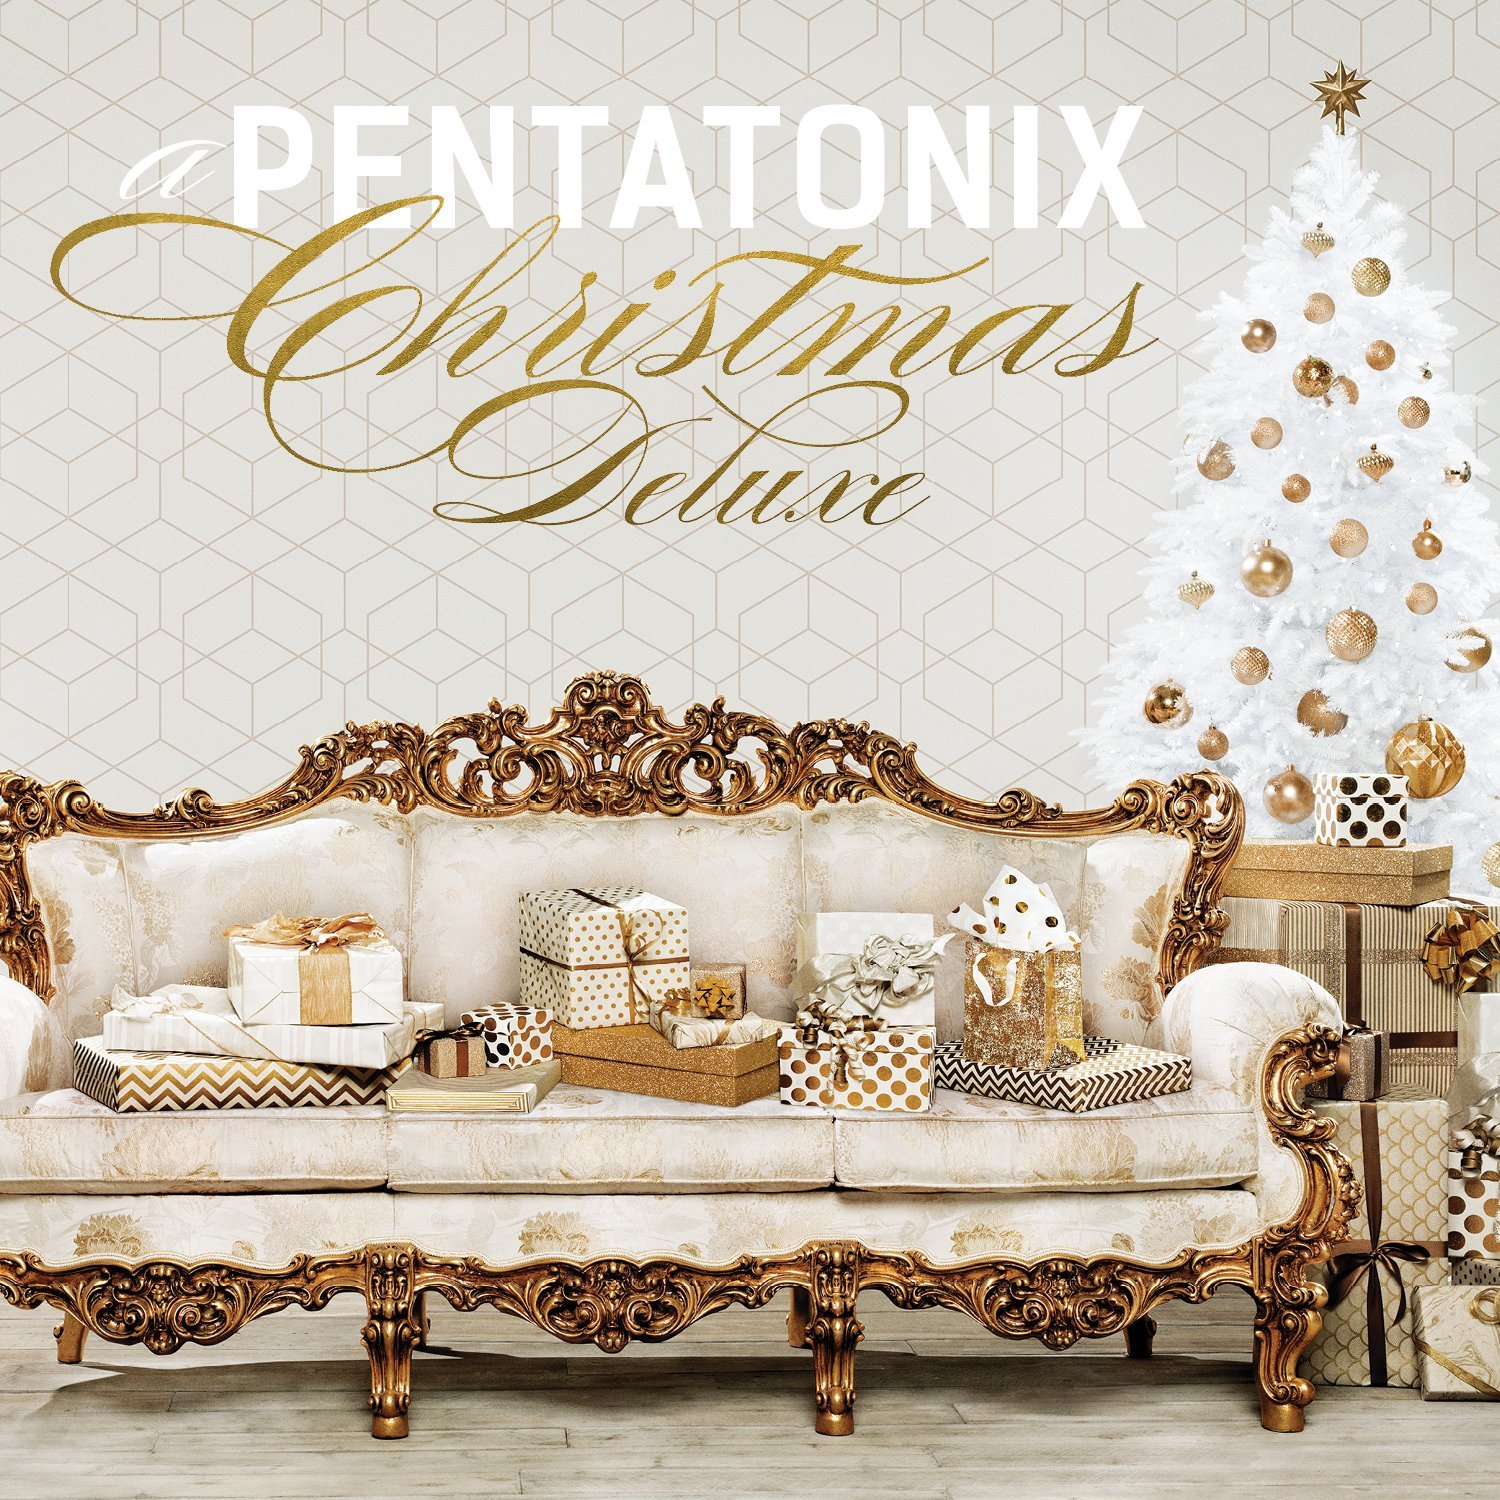 A Pentatonix Christmas (Deluxe Edition) 2017 Pop - Pentatonix - Download Pop Music - Download ...